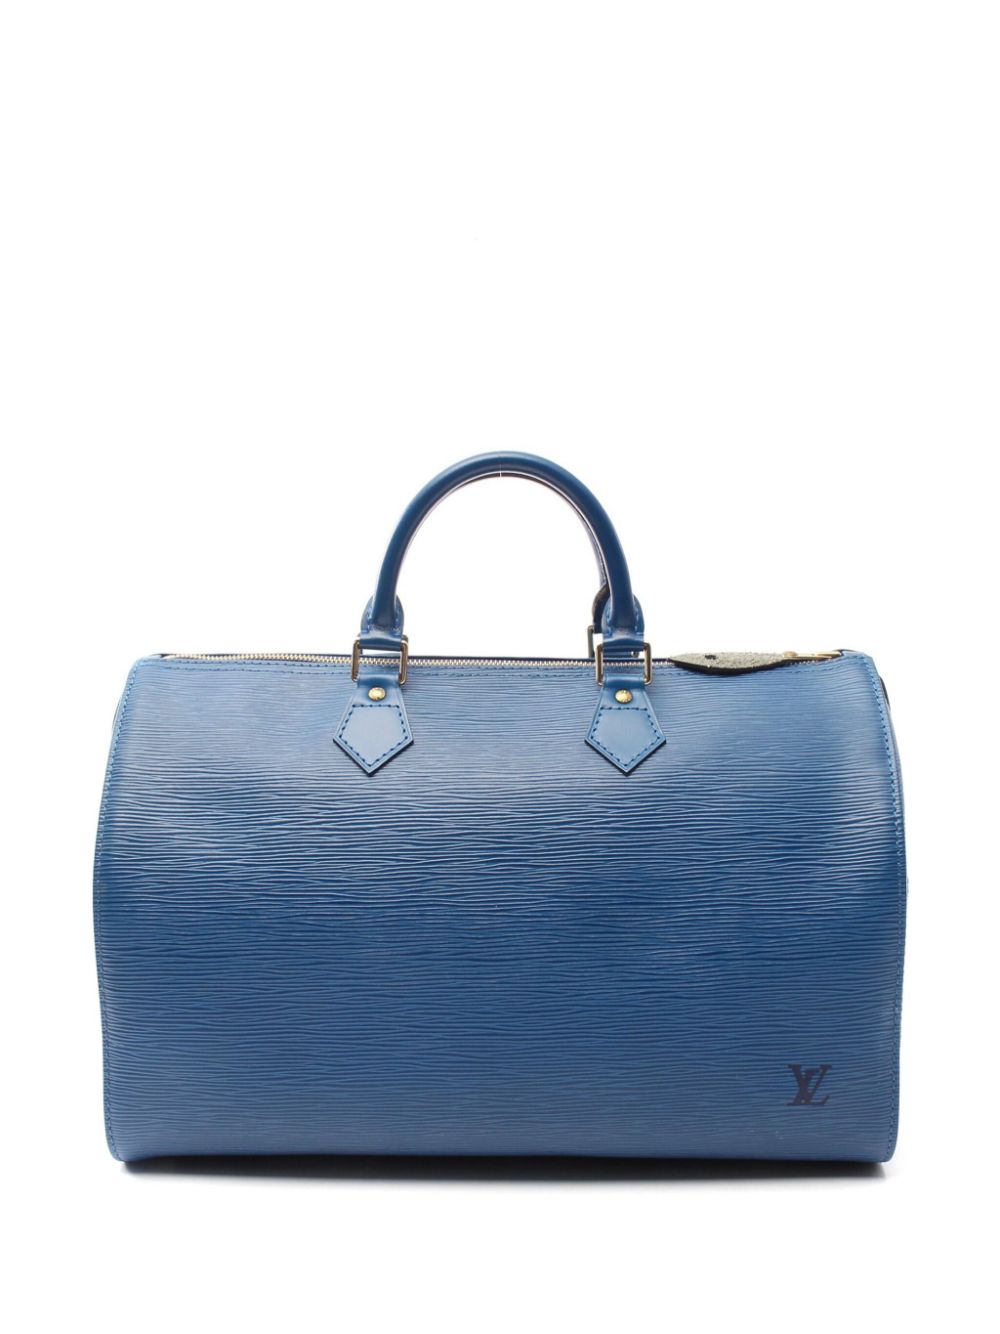 Louis Vuitton 1994 pre-owned Speedy 35 handbag